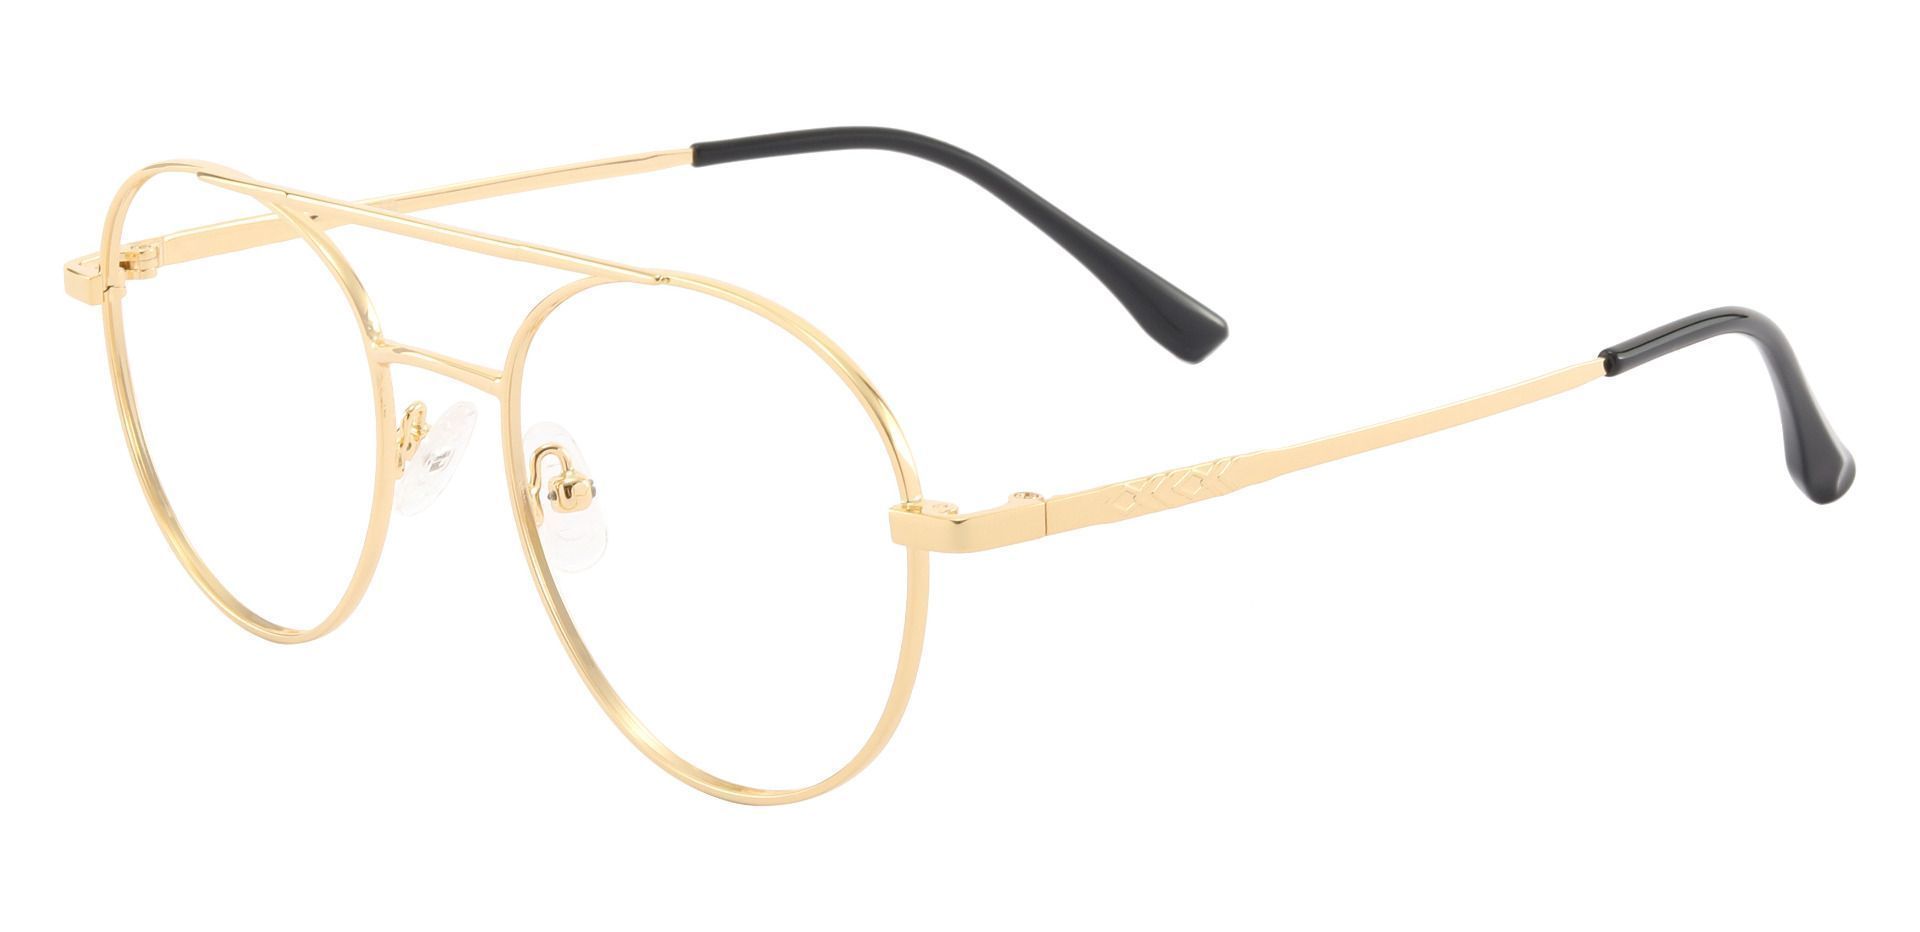 Cresson Aviator Progressive Glasses - Gold